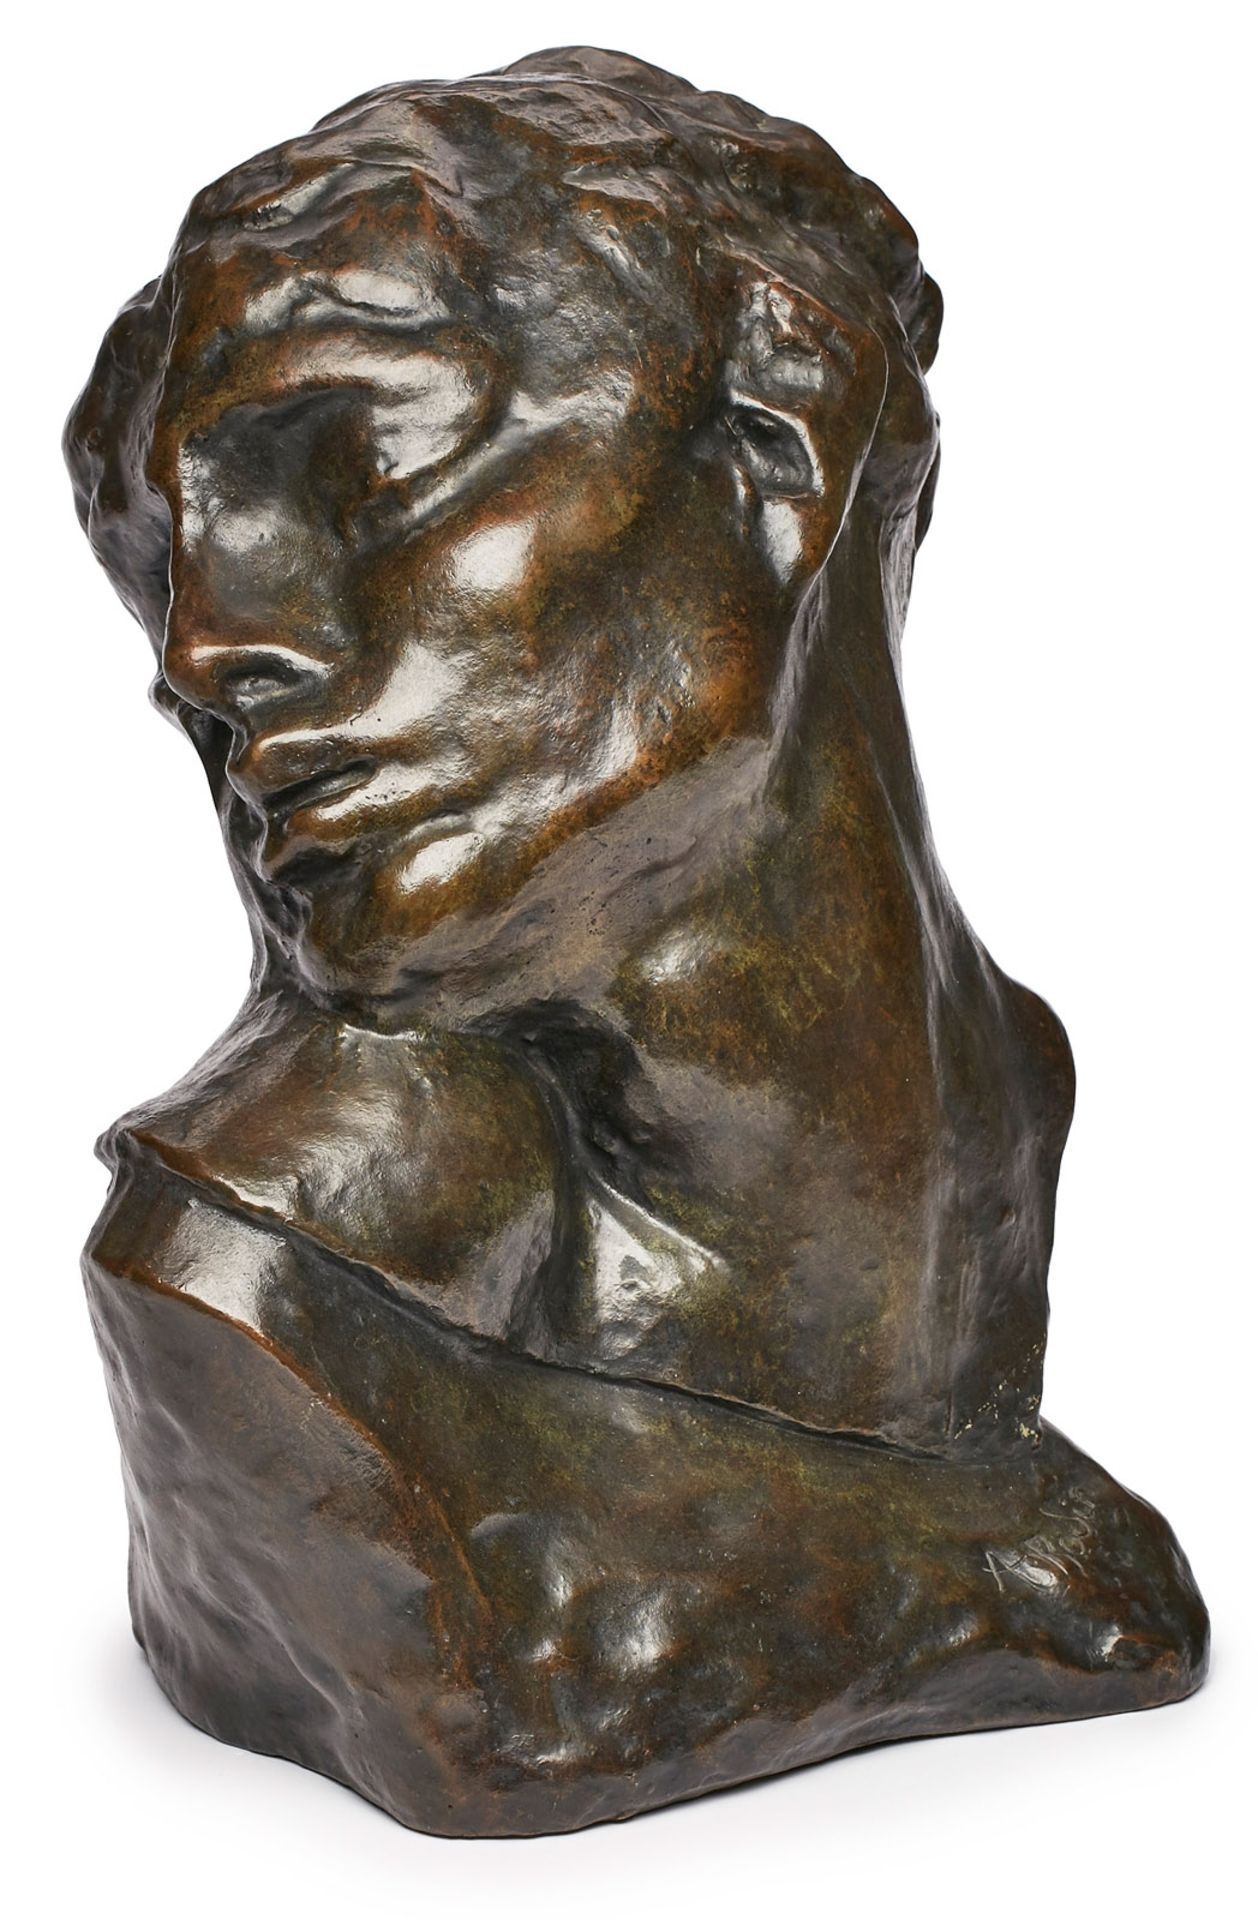 Gr. Bronze wohl nach Auguste Rodin: "Tête de la Luxure", 1. Hälfte 20. Jh. - Bild 10 aus 13